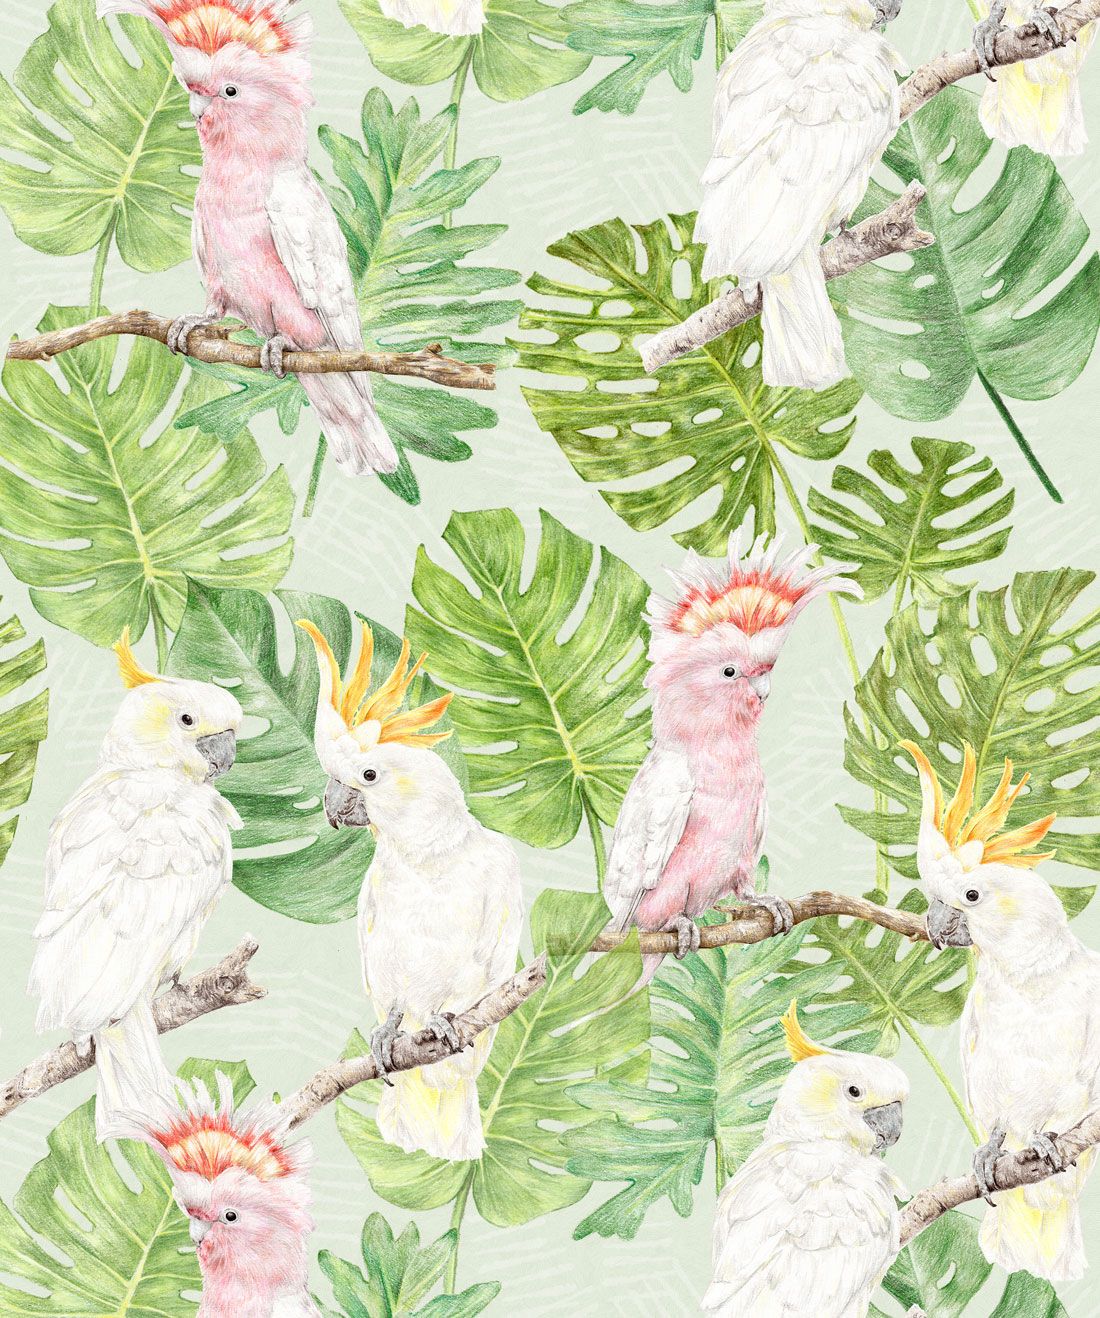 Tropical Cockatoos is a Tropical Bird Wallpaper